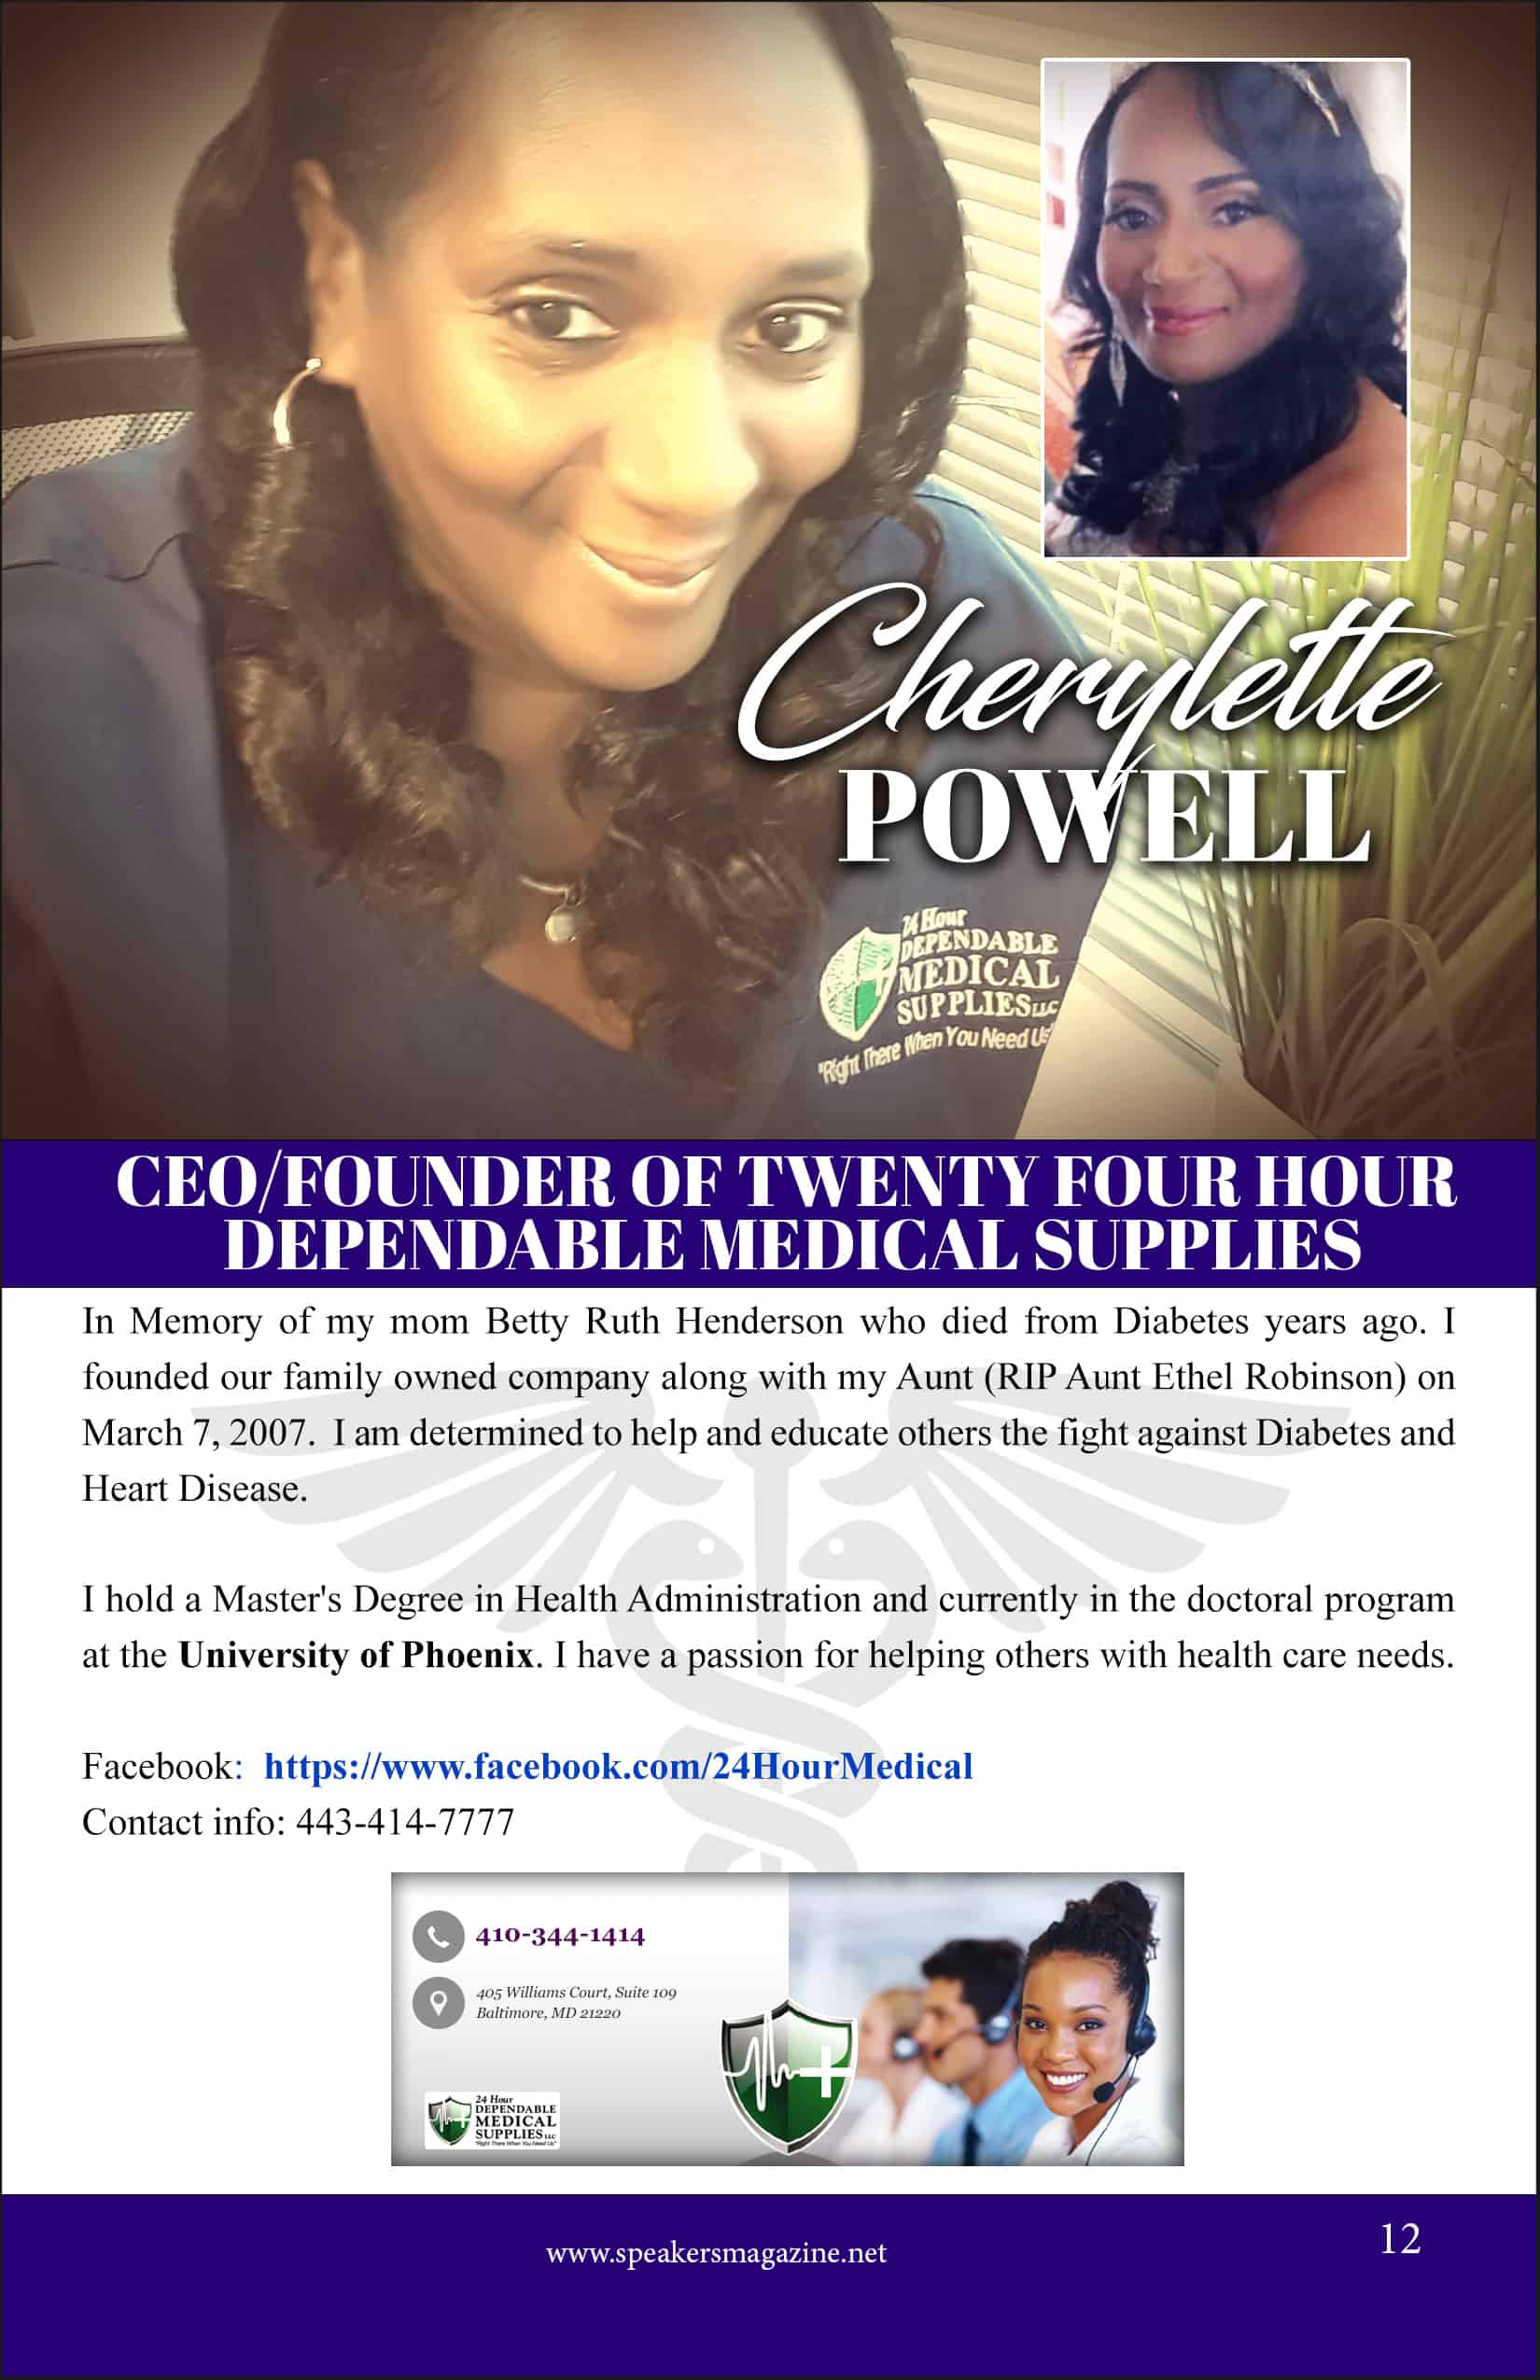 Cherylette Powell CEOFounder of Twenty Four Hour Dependable Medical Supplies